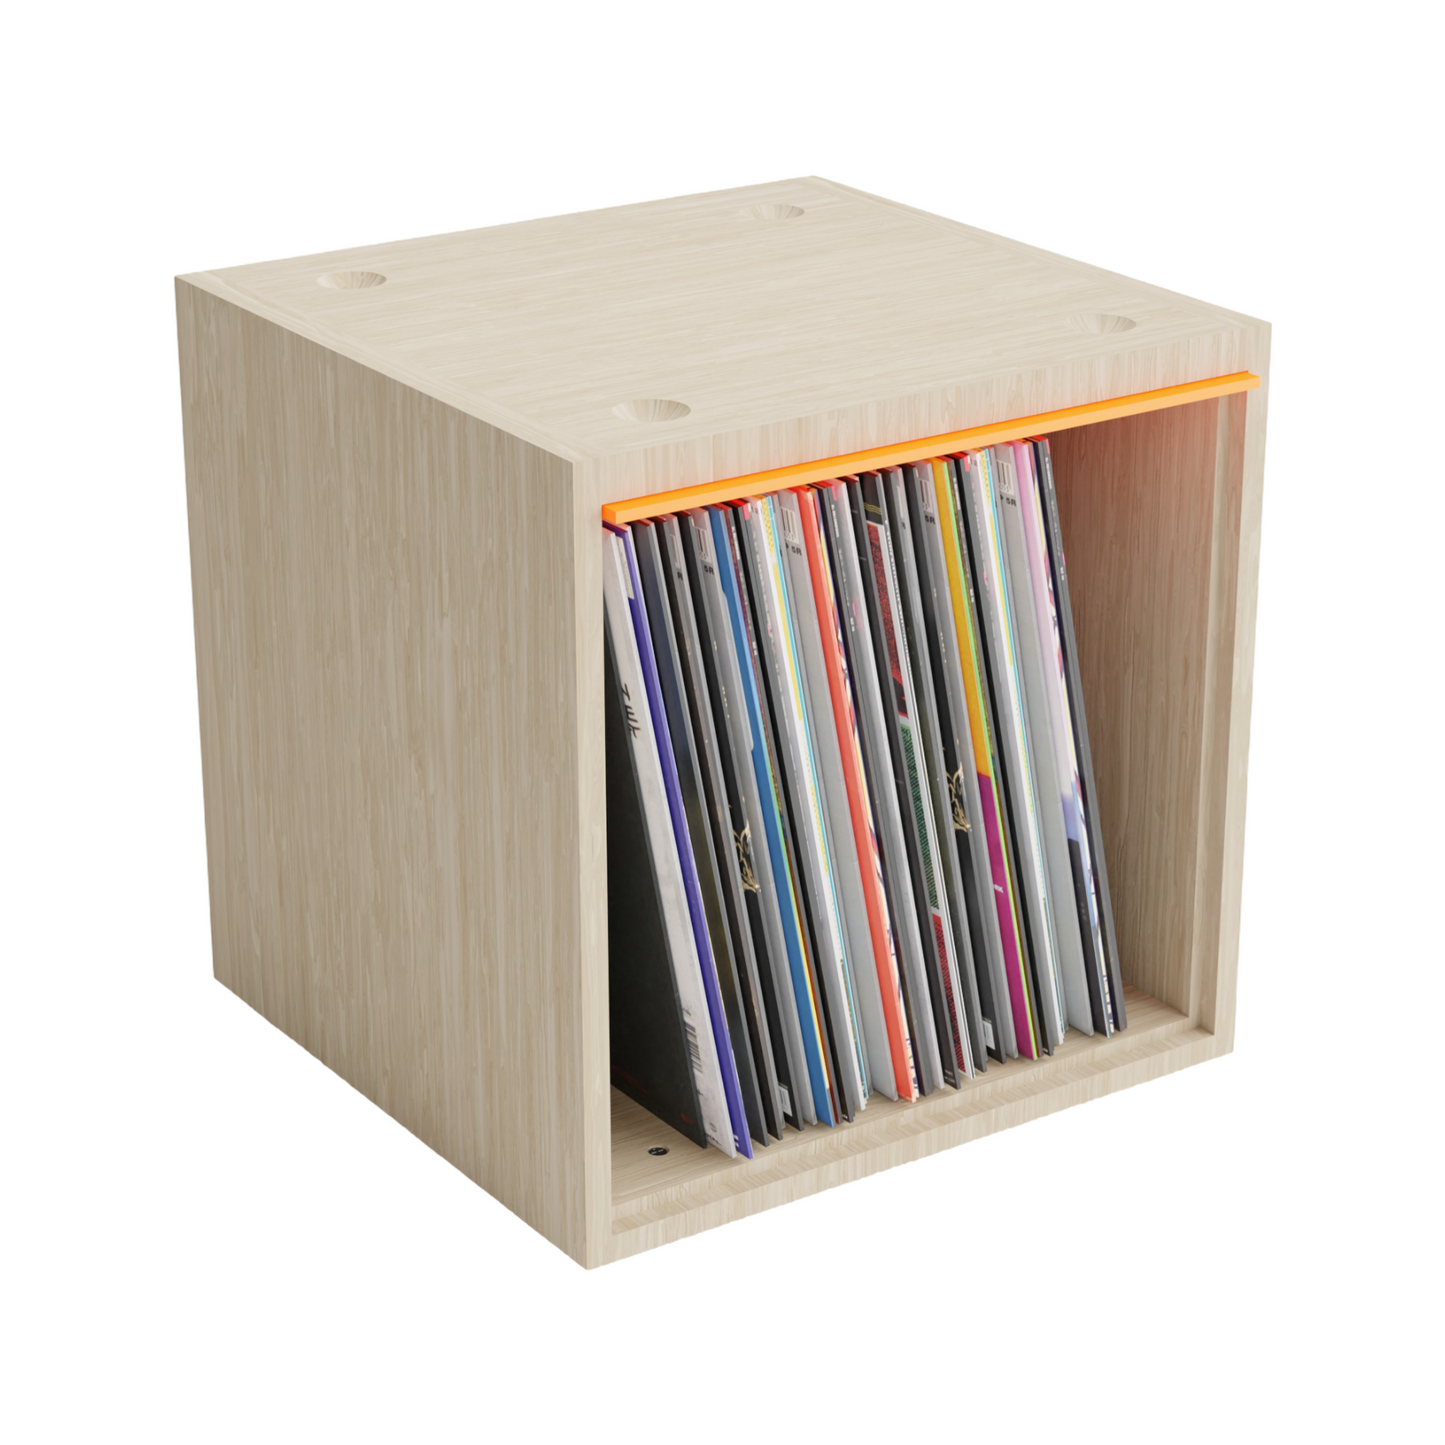 Vinyl Record Box STAX - Holds up to 50 Albums, Record Box - V-BOX STAX -